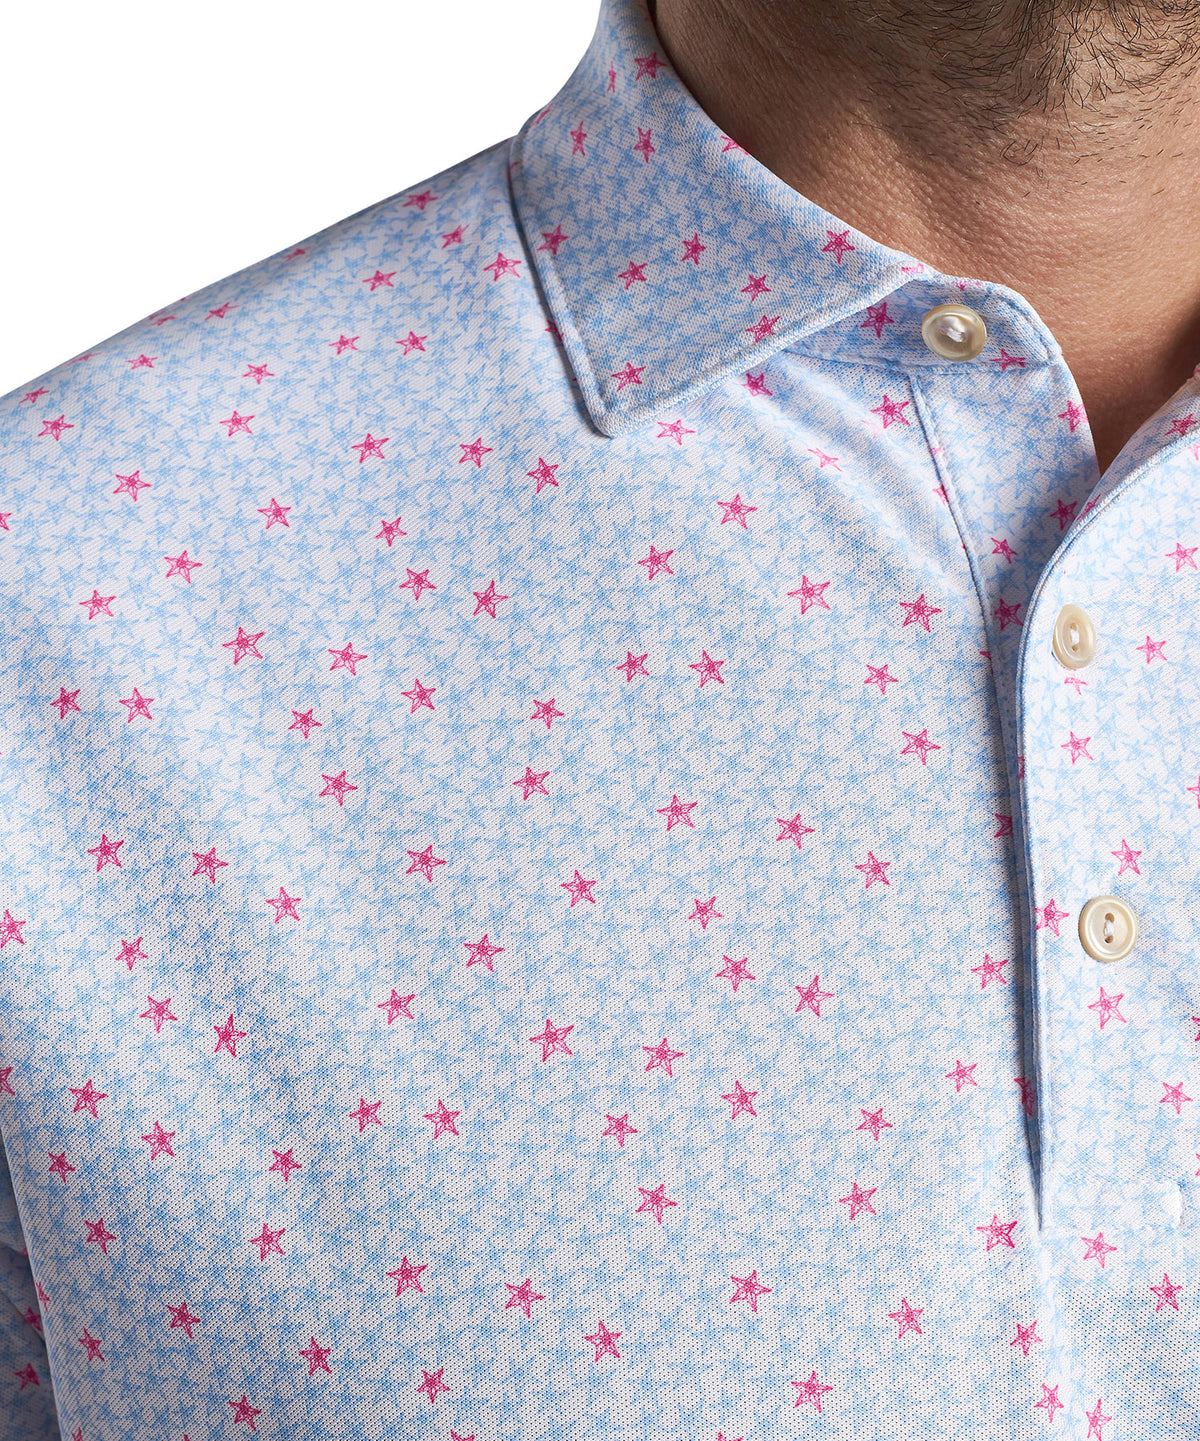 Peter Millar Short Sleeve Starfish Print Polo Knit Shirt, Big & Tall